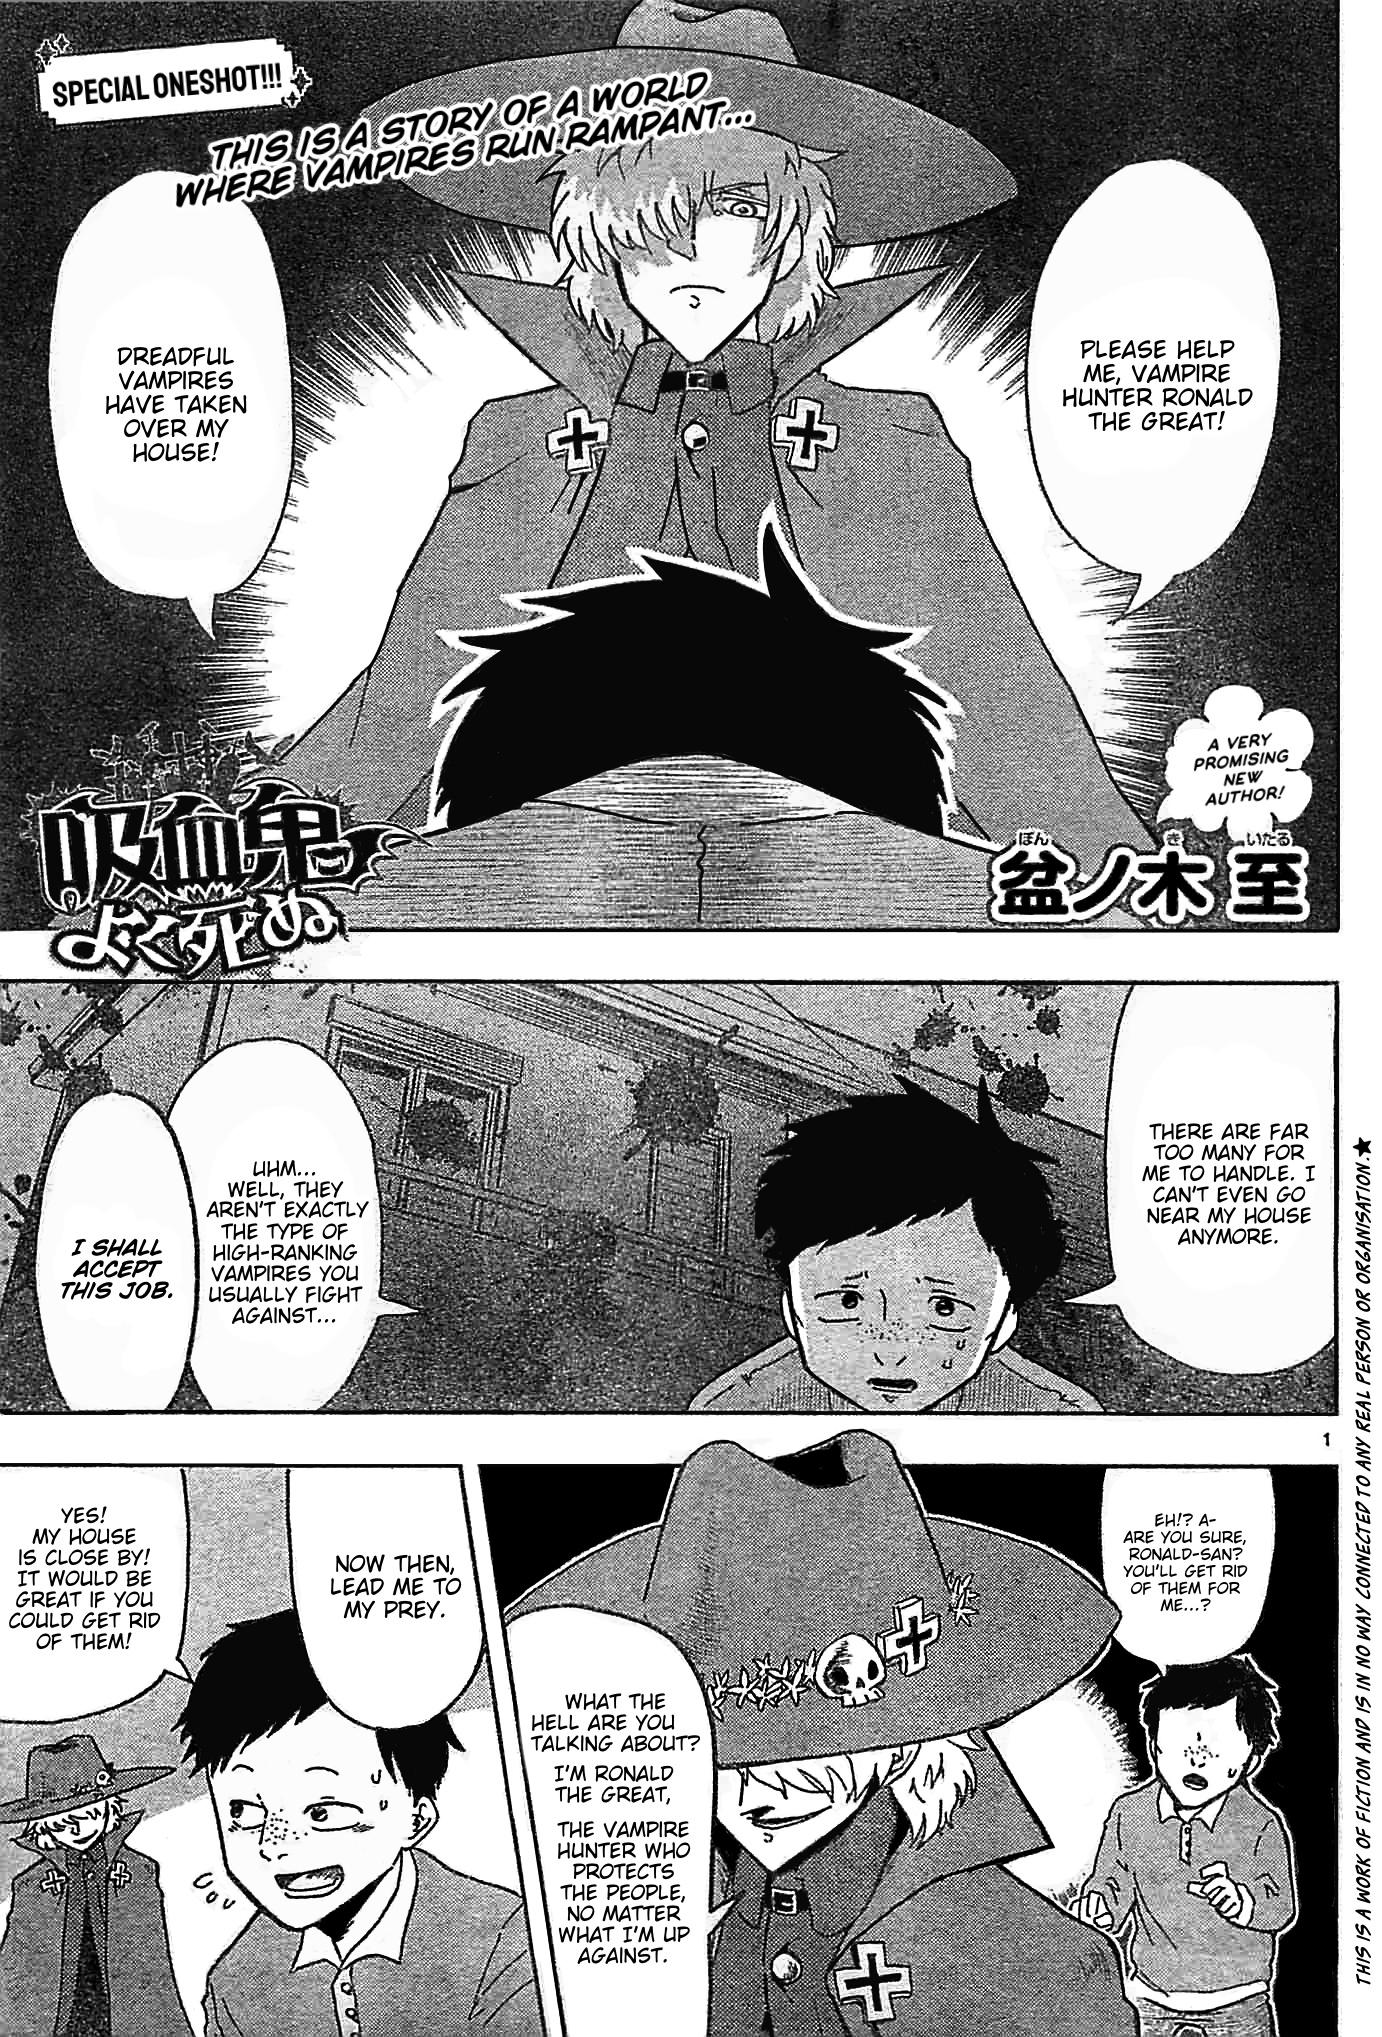 Read Kyuuketsuki Sugu Shinu Chapter 7: 7Th Death: Collapse On The Highway  To Success on Mangakakalot